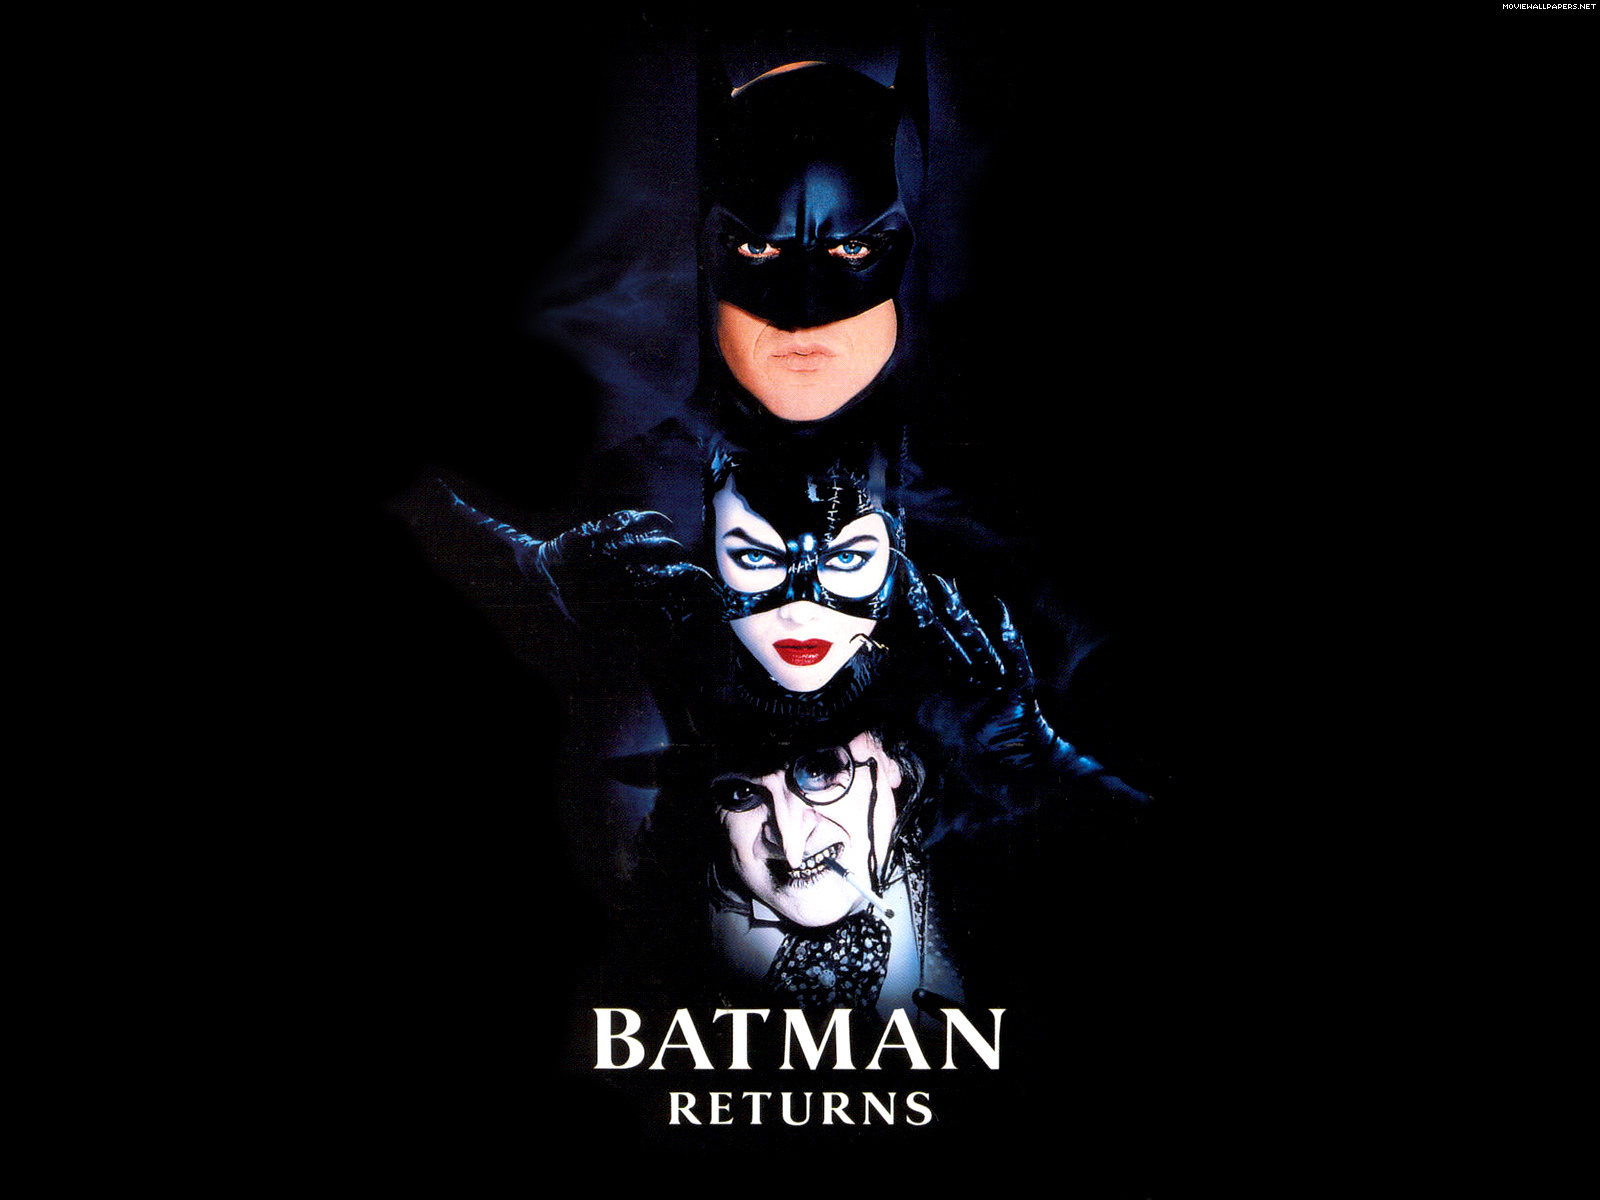 Batman Returns Image Character Wallpaper